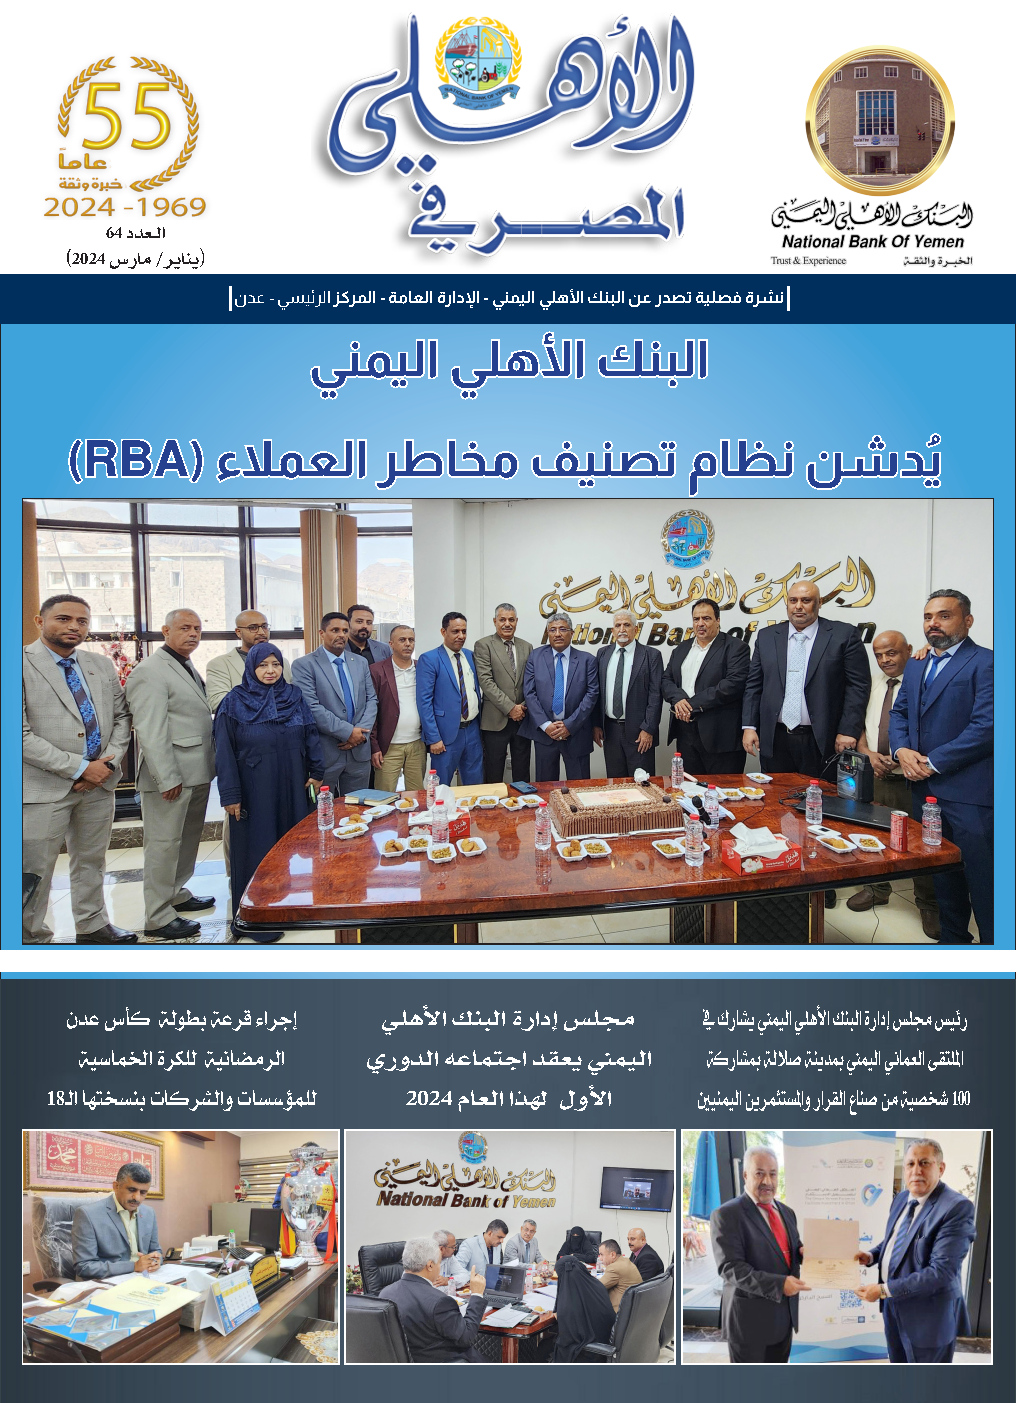 Alahli Almasrafi magazine